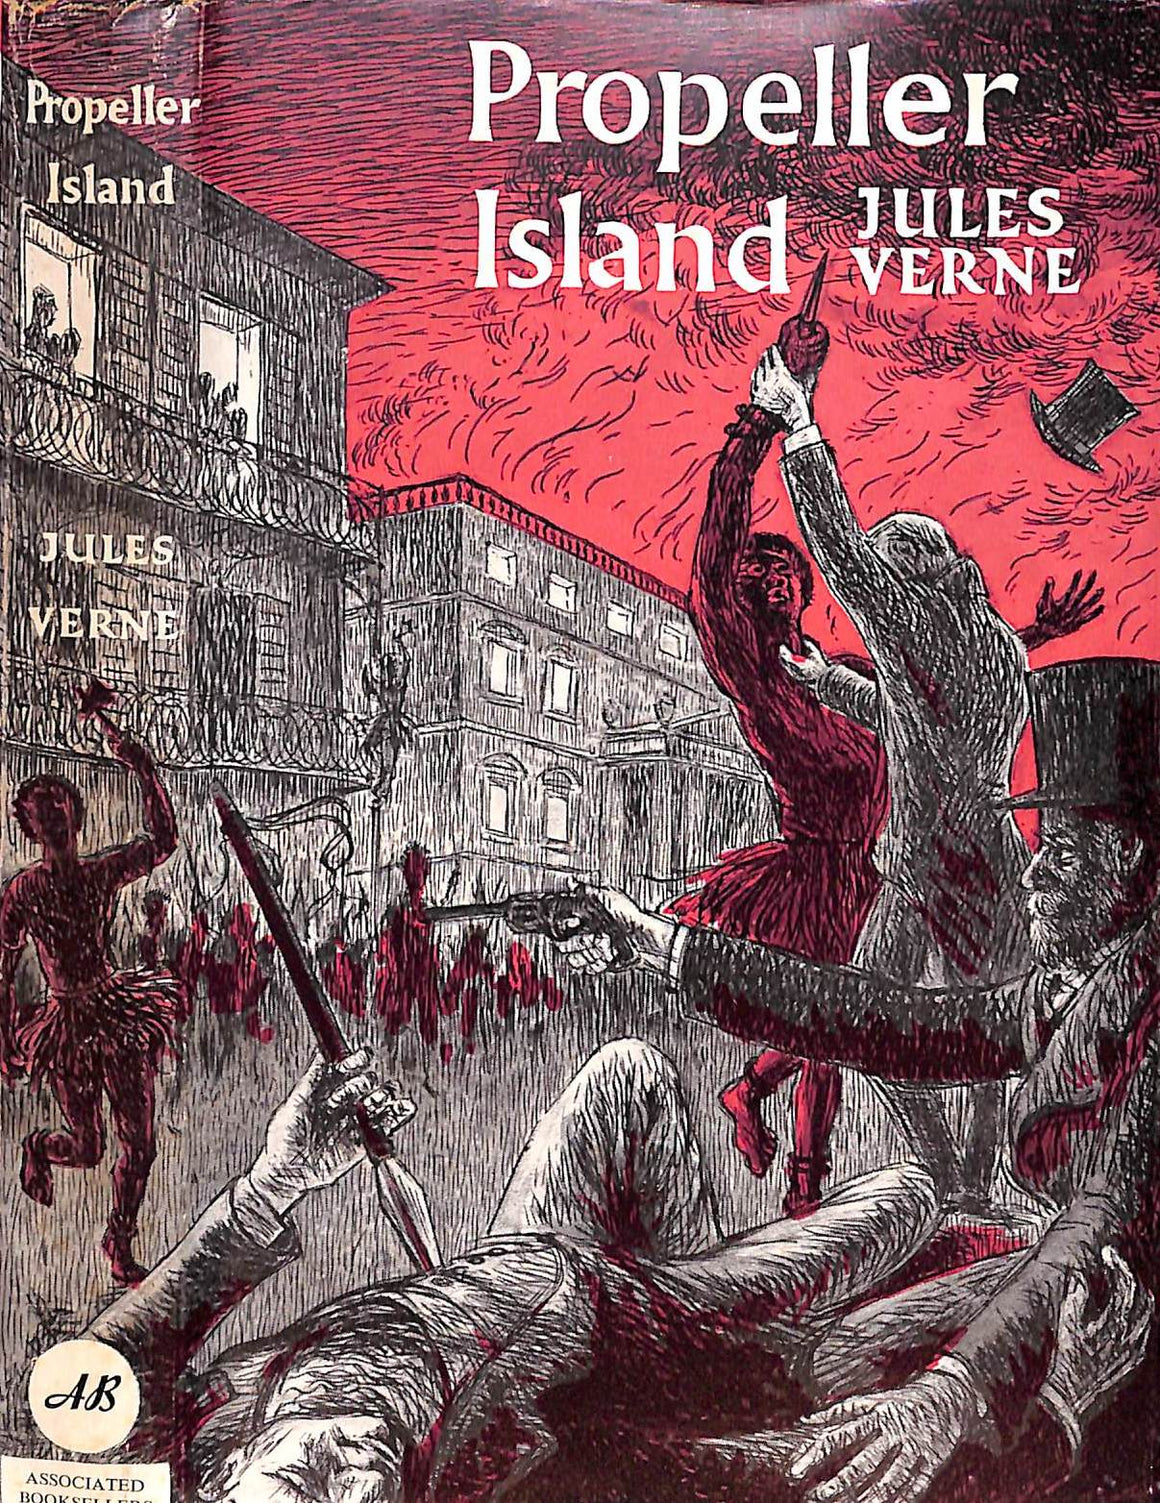 "Propeller Island" 1961 VERNE, Jules